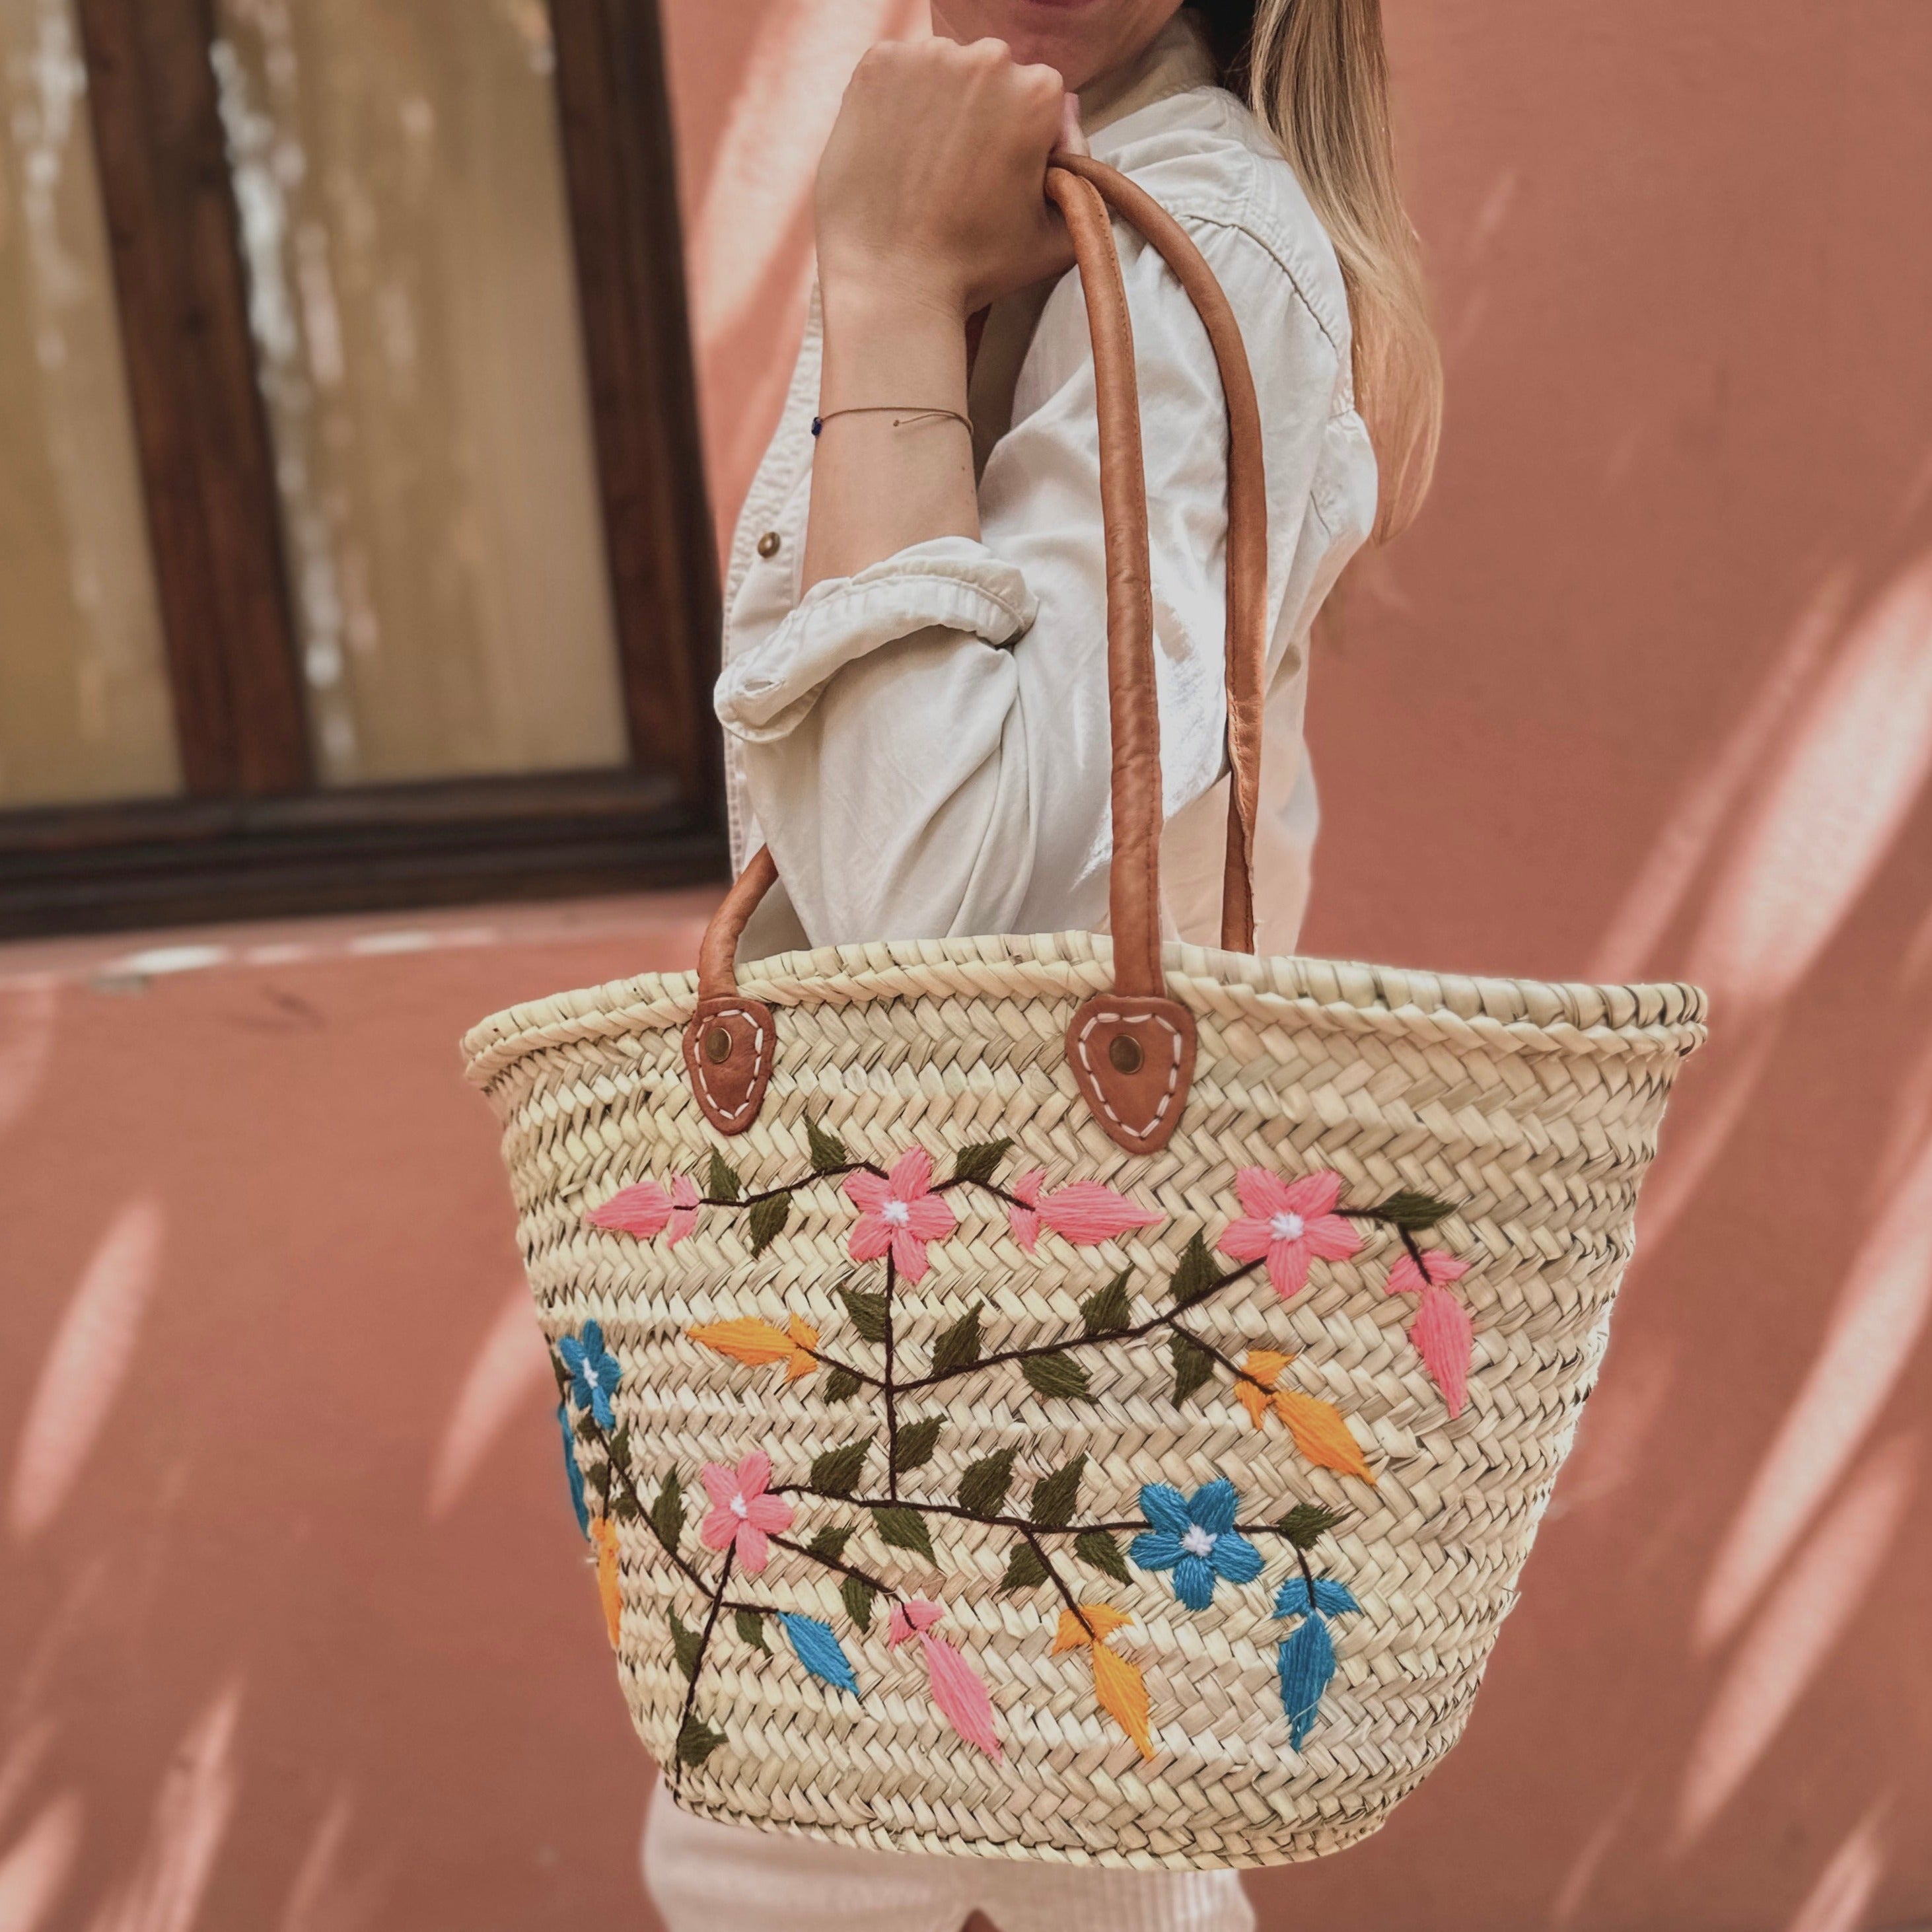 Moroccan Floral Trellis Tote Bag for Sale by ArastuRS2